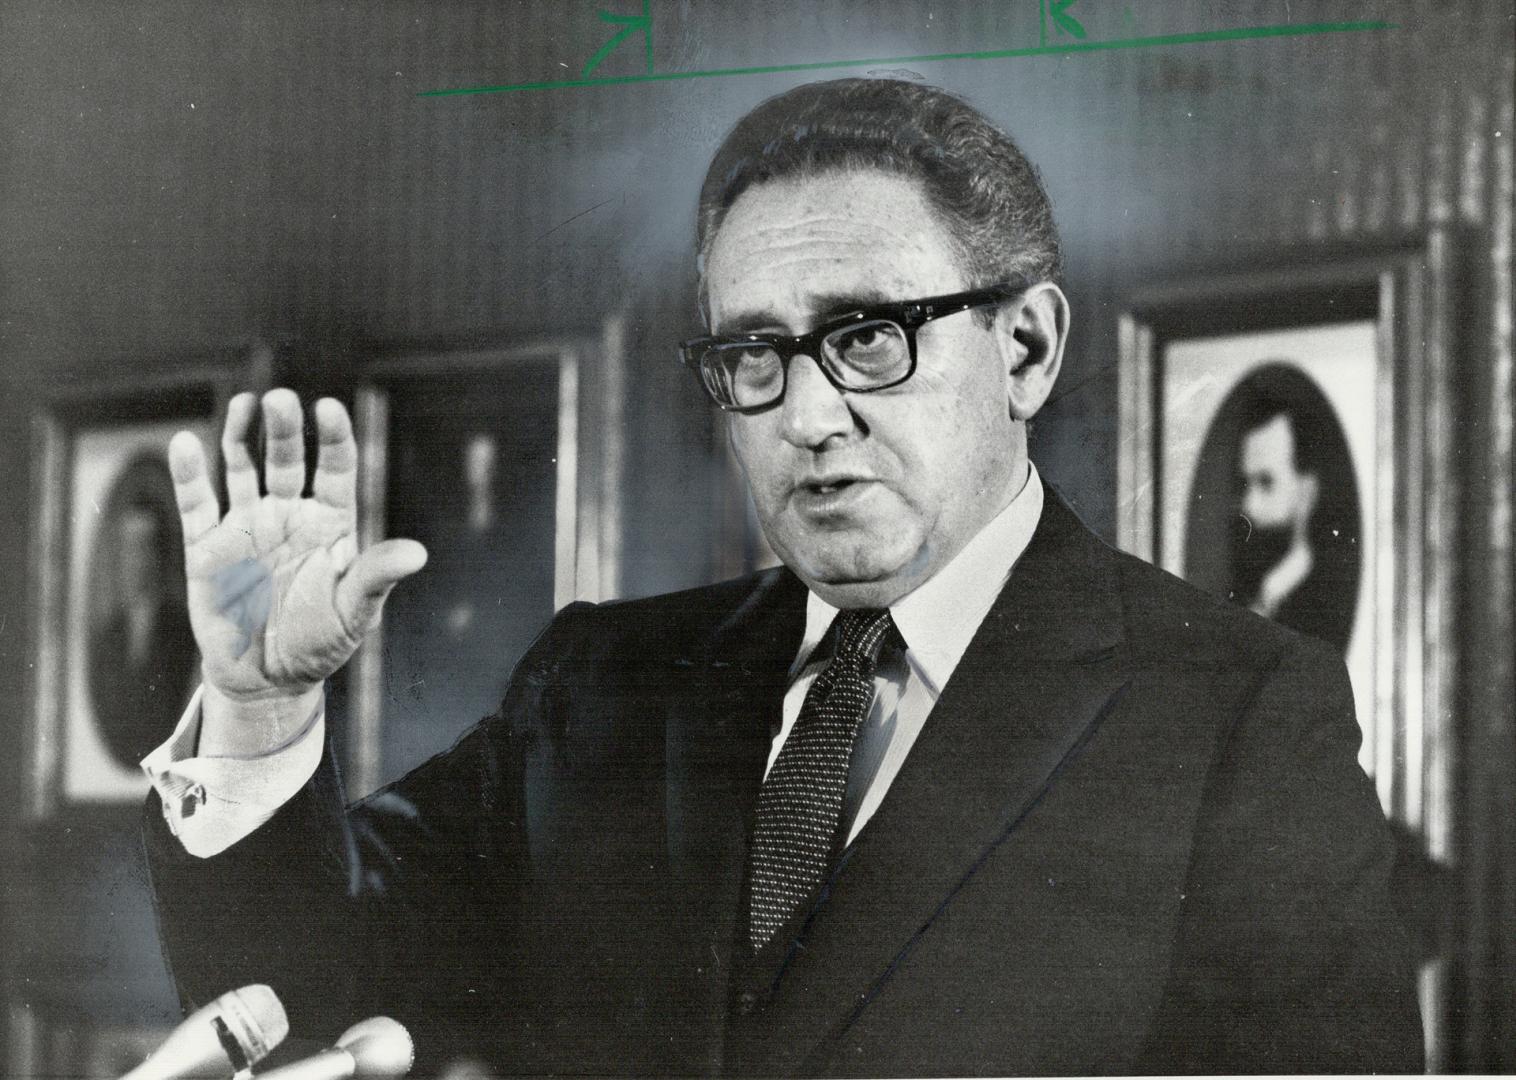 Still bargaining: Henry Kissinger, former U